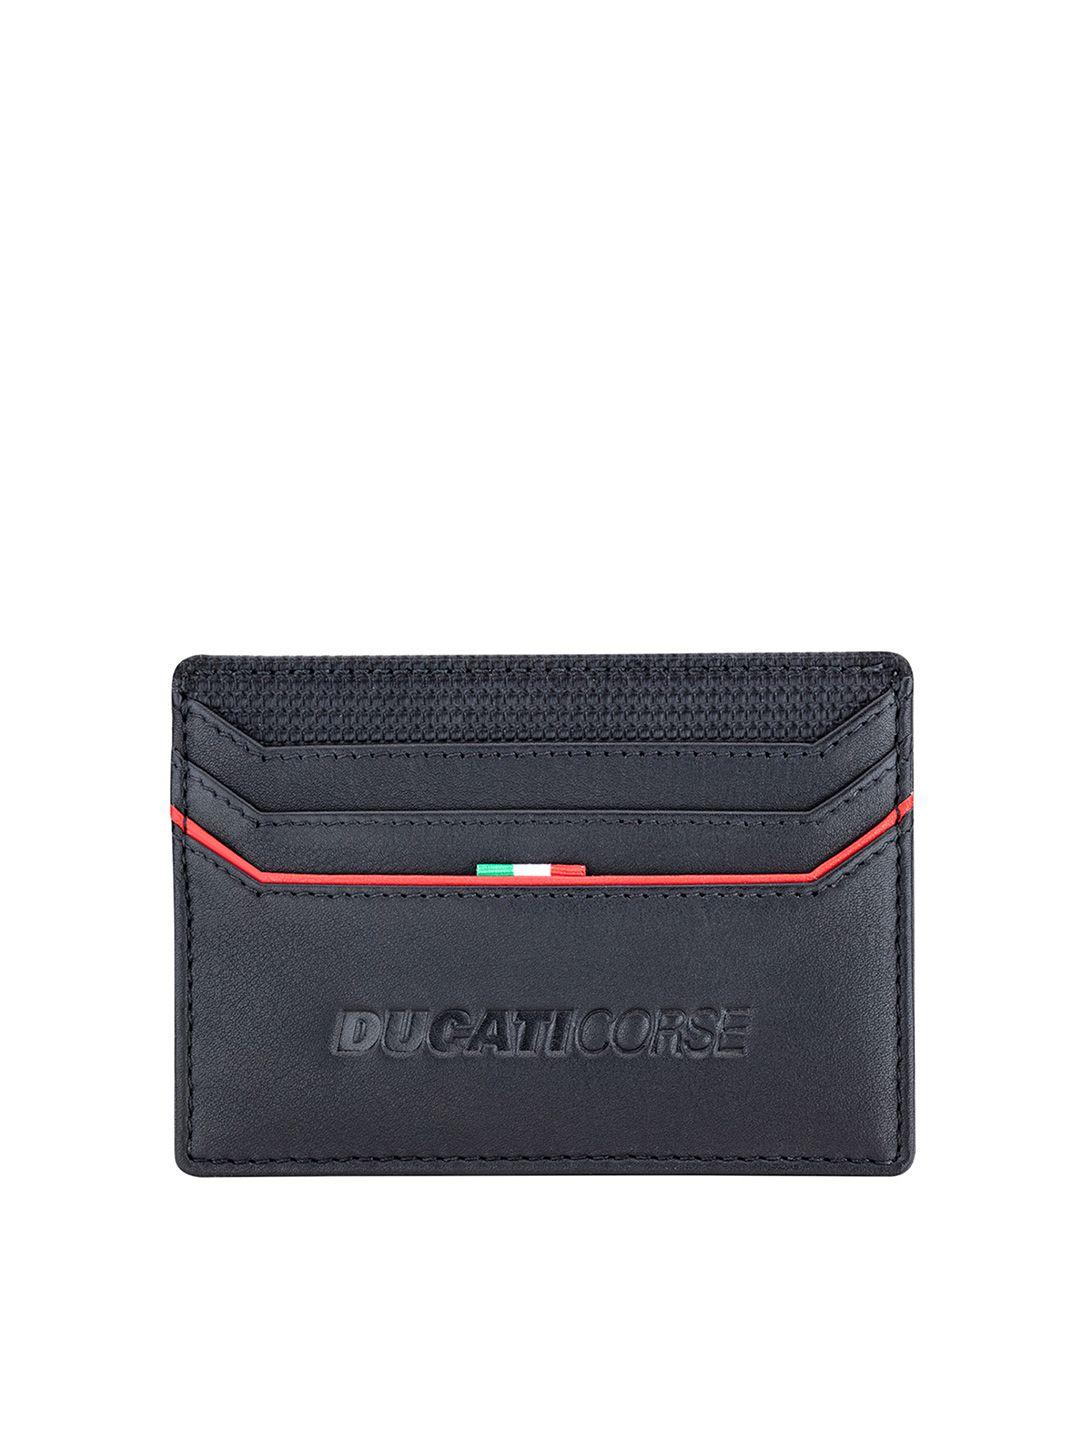 ducati corse men black leather card holder